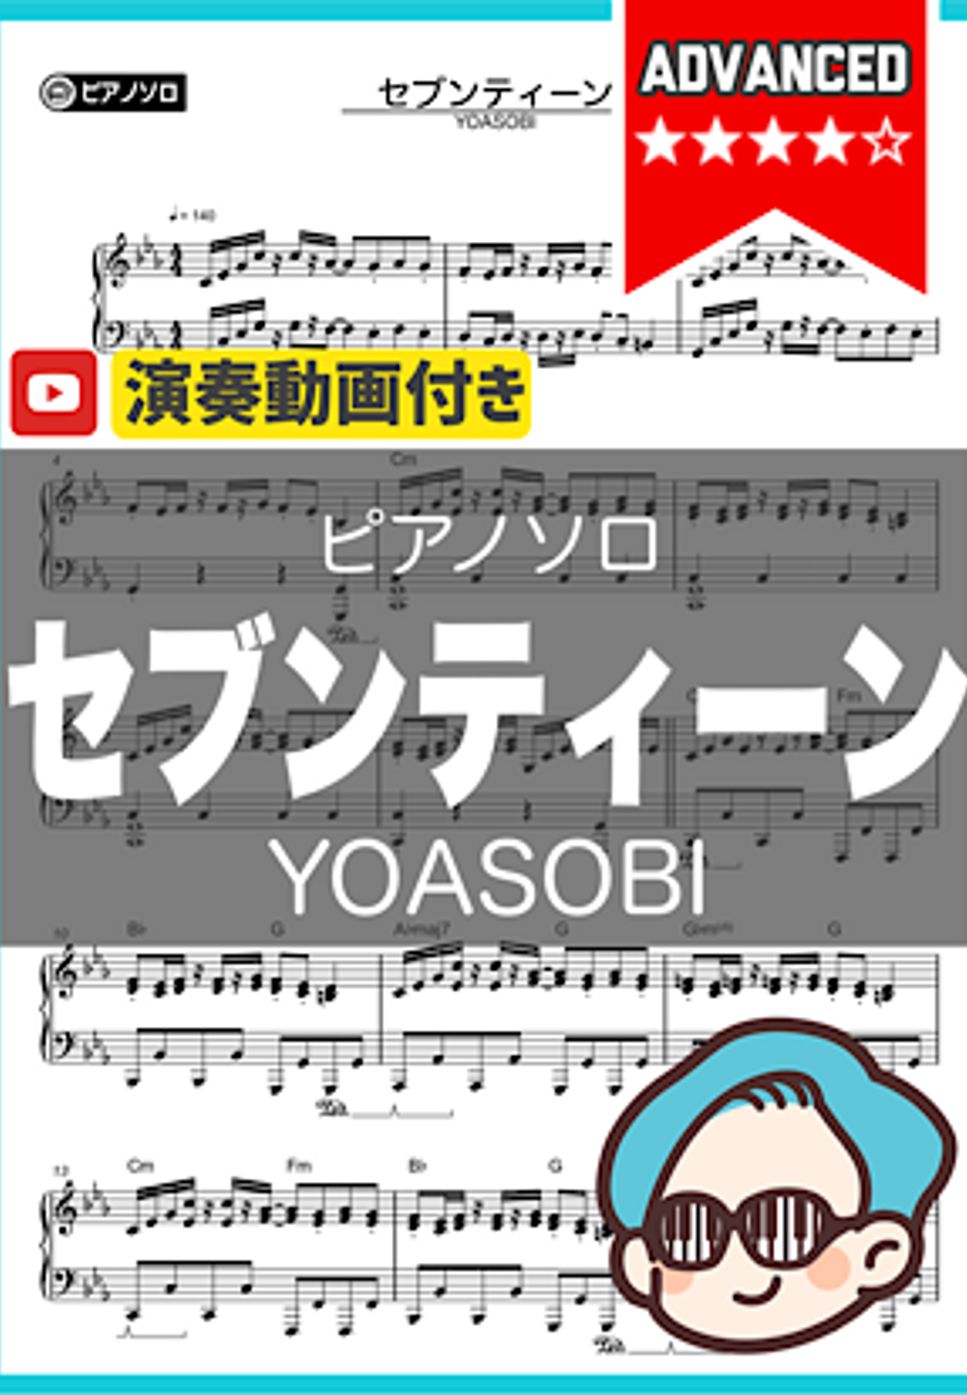 YOASOBI - セブンティーン by シータピアノ